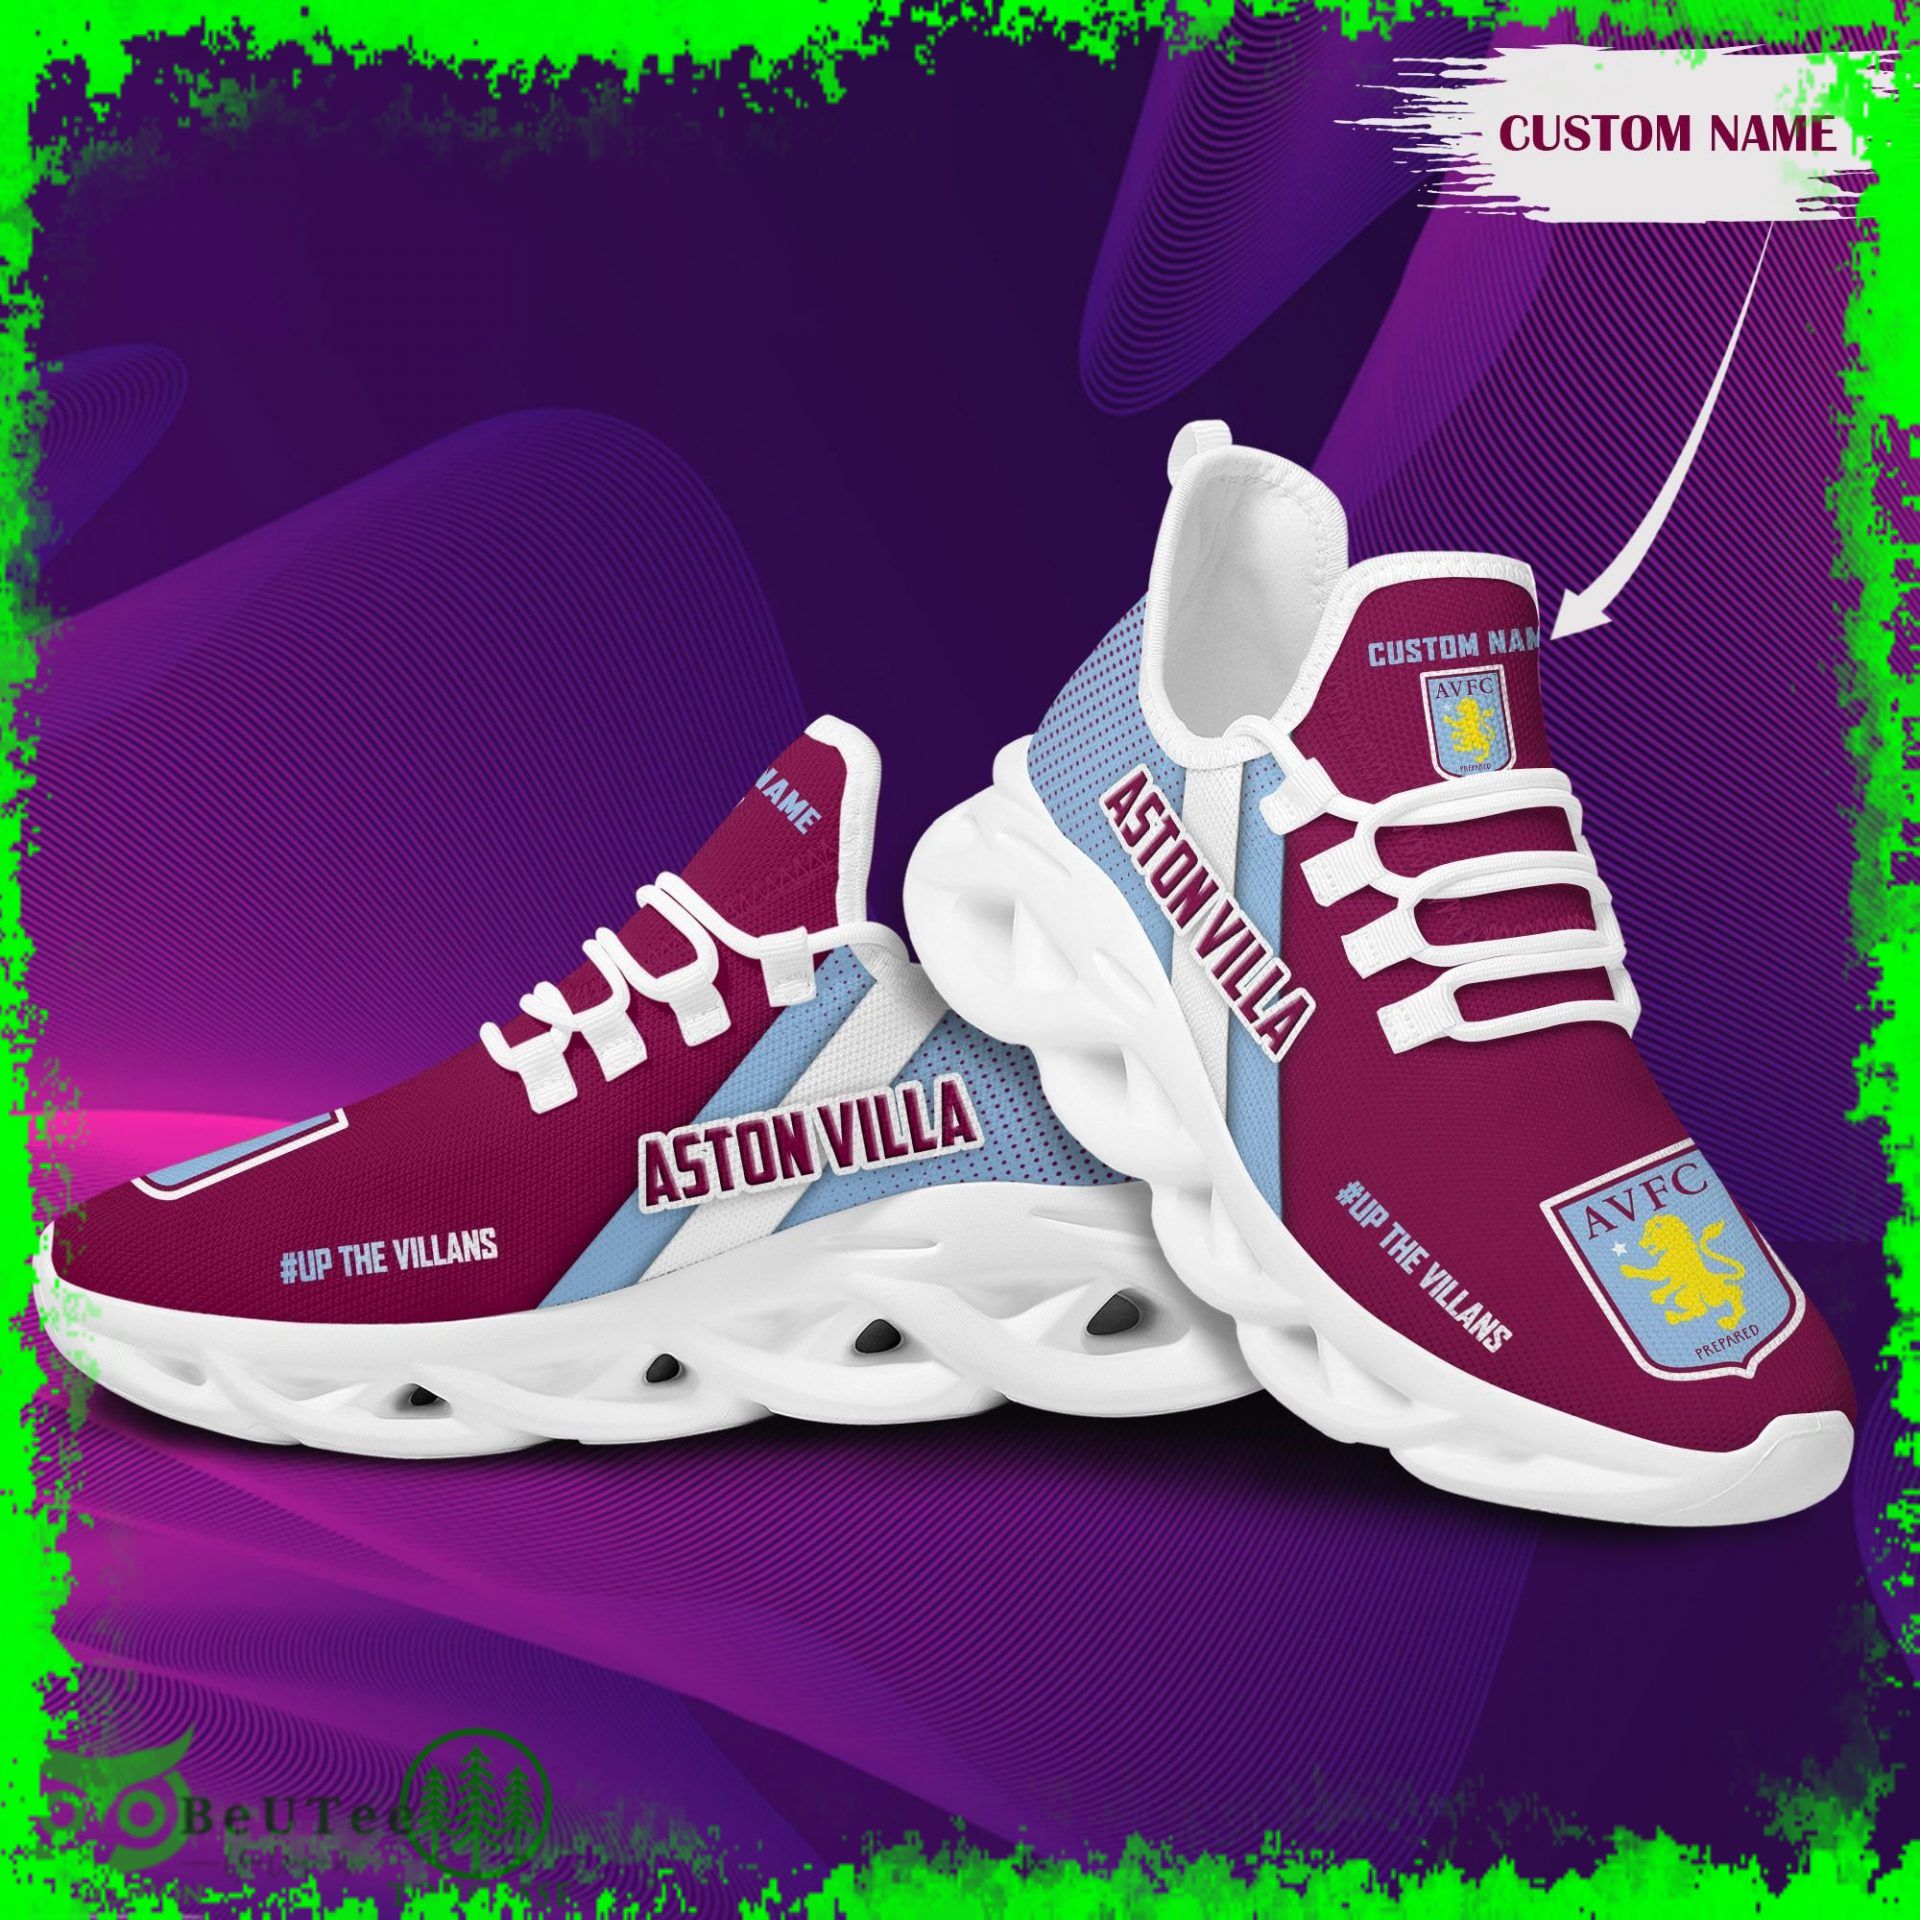 Aston Villa FC Claret up the Villans Custom Name Max Soul Shoes